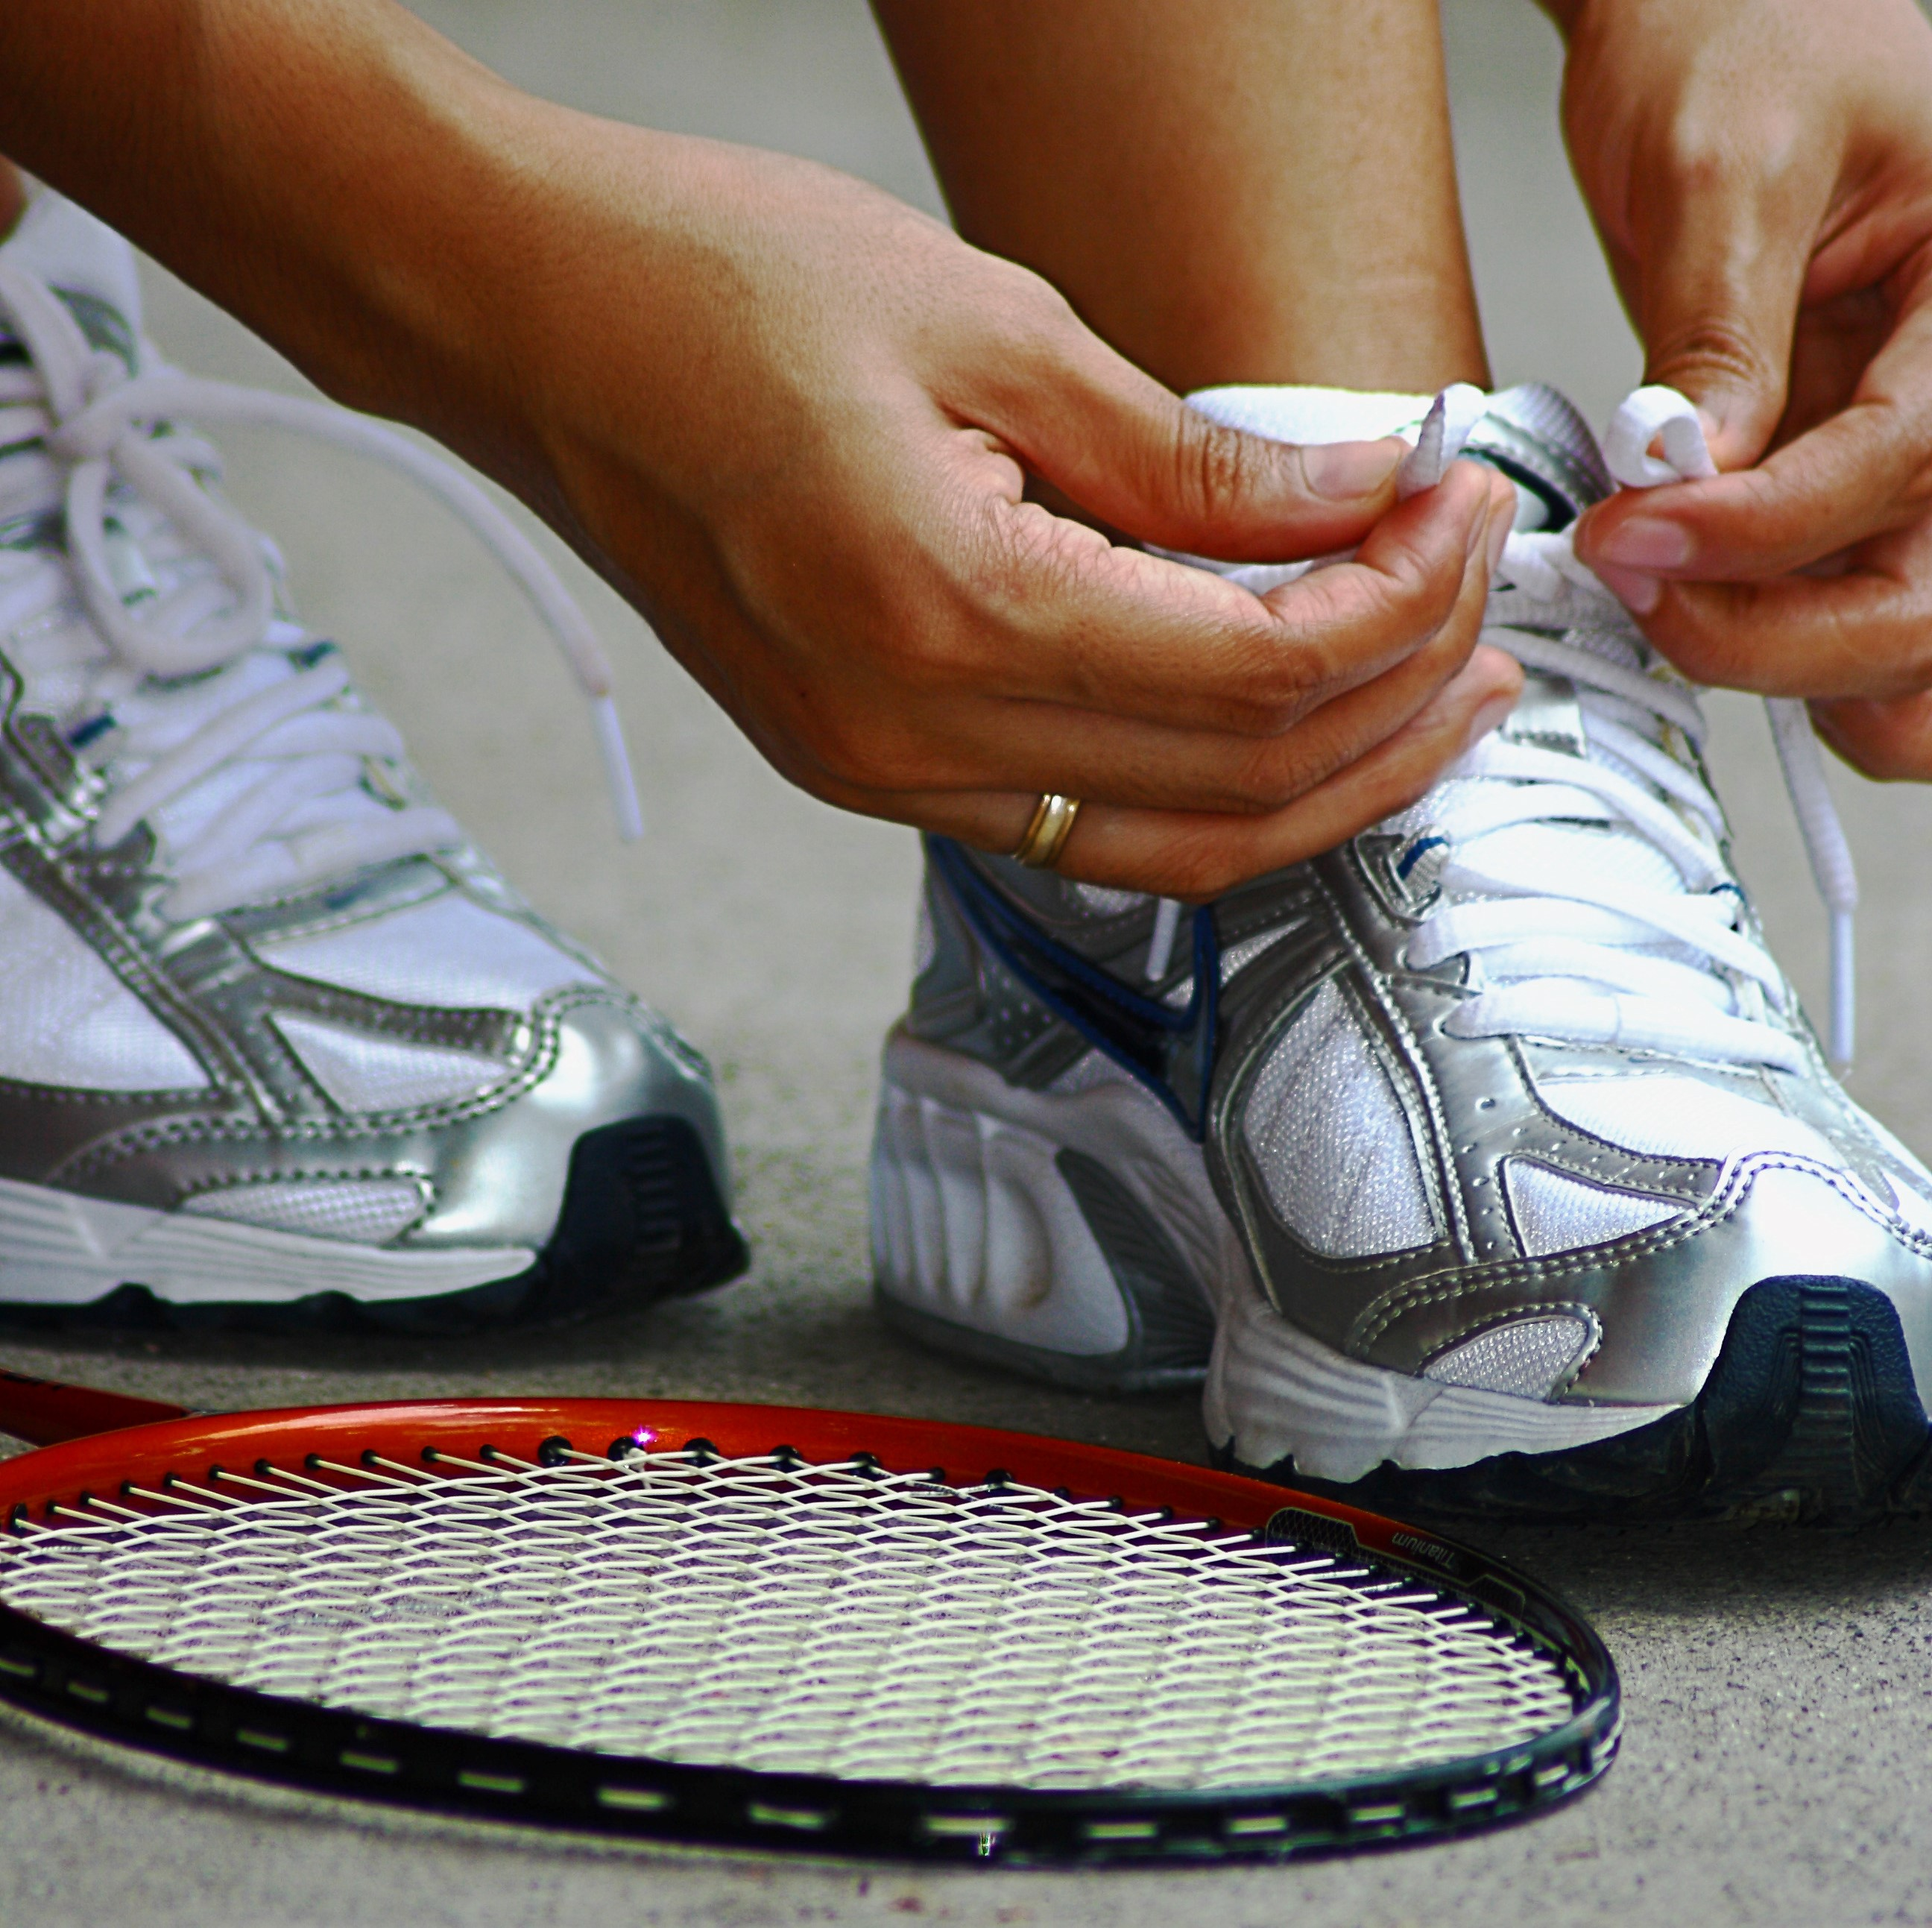 uploads/slider/20150923/tying-shoe-laces-ready-for-a-game-of-badminton_fJ2v3NDd.jpg